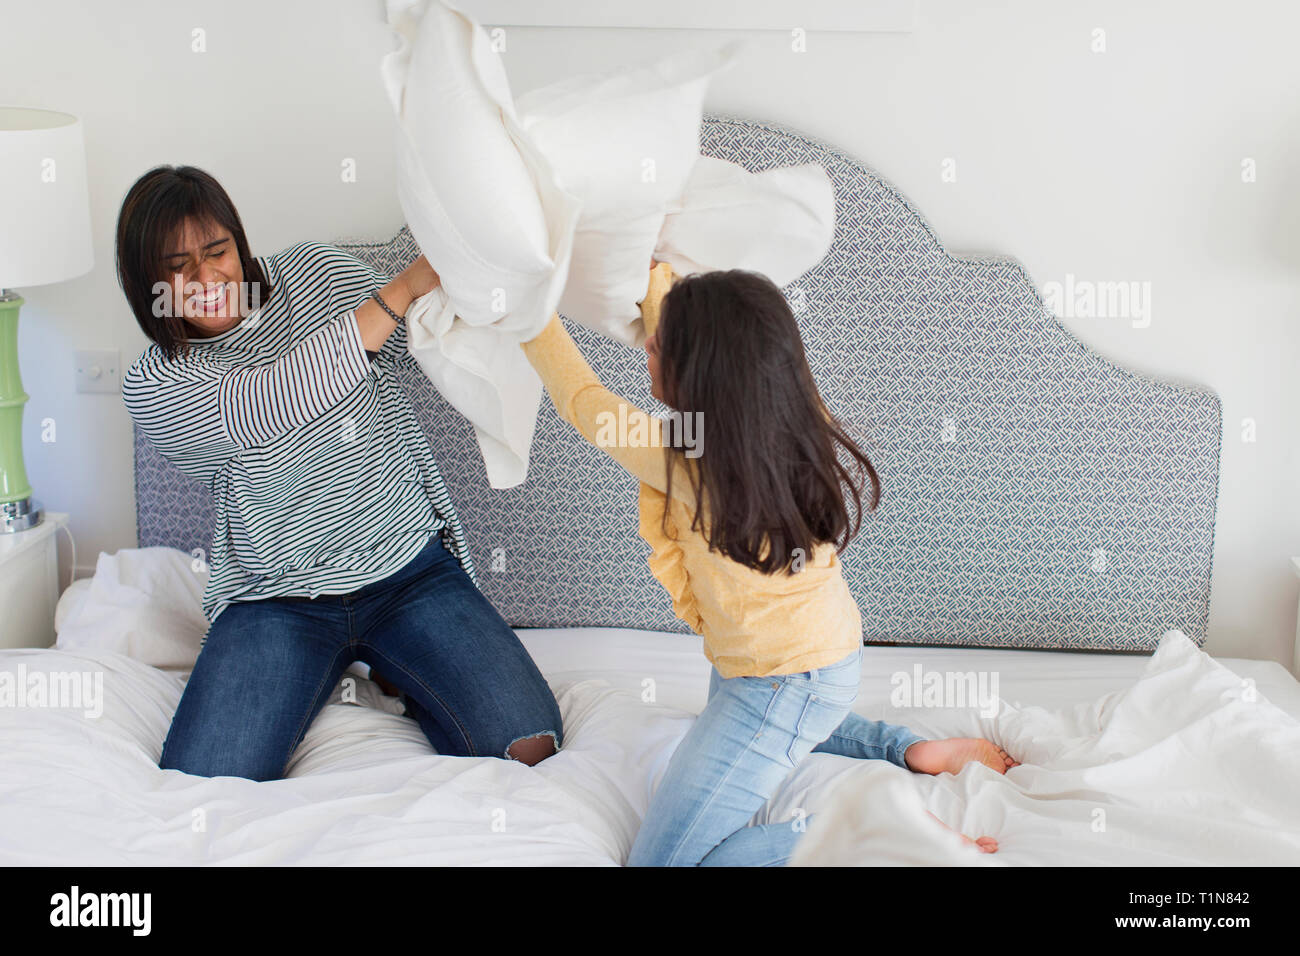 Playful mother and daughter enjoying pillow fight Stock Photo